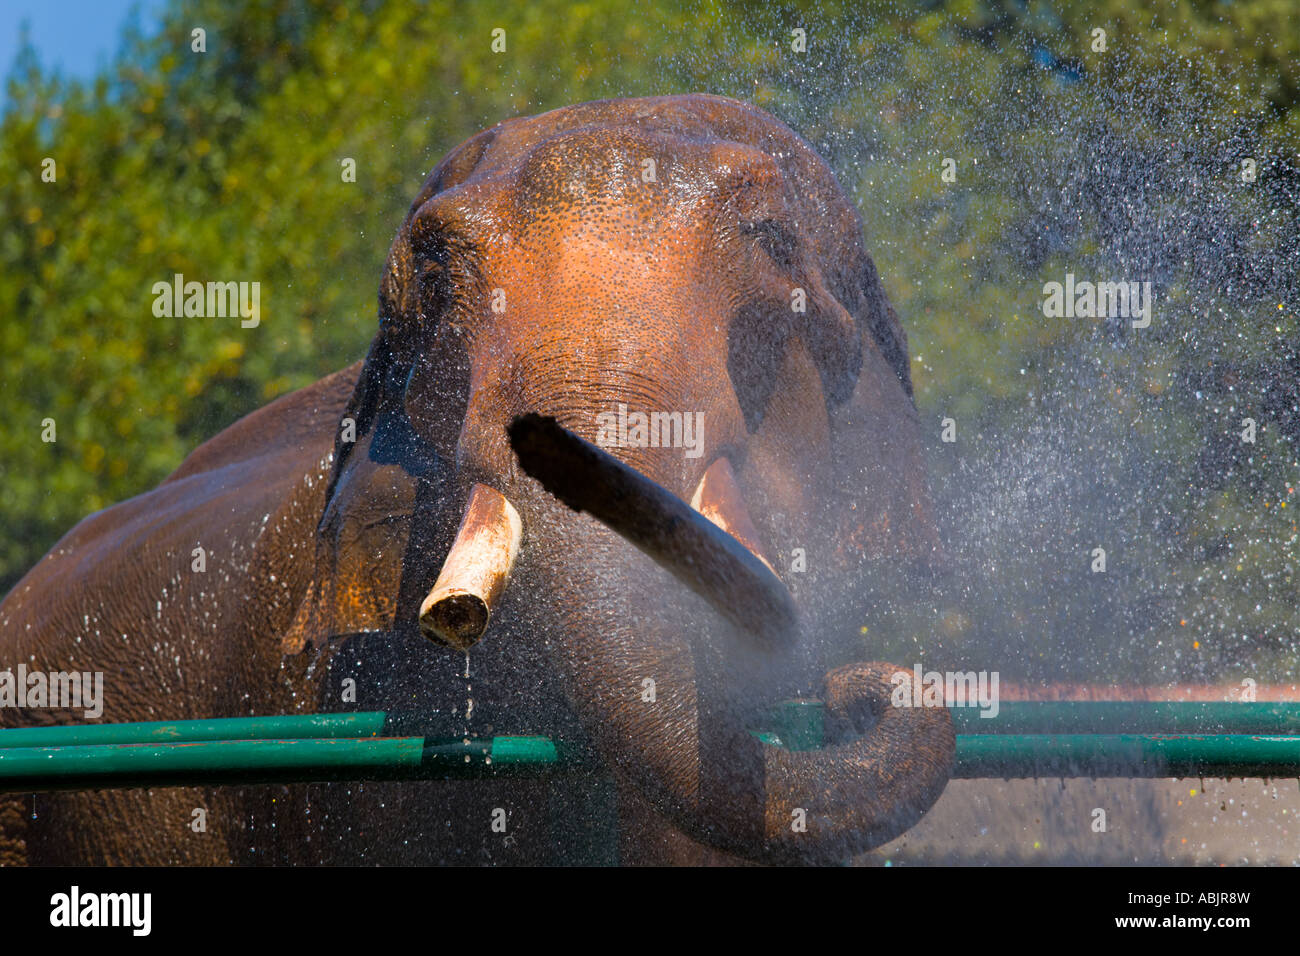 Cleaning elephant, Safari site on Brioni islands, Veliki Brijun, Croatia Stock Photo